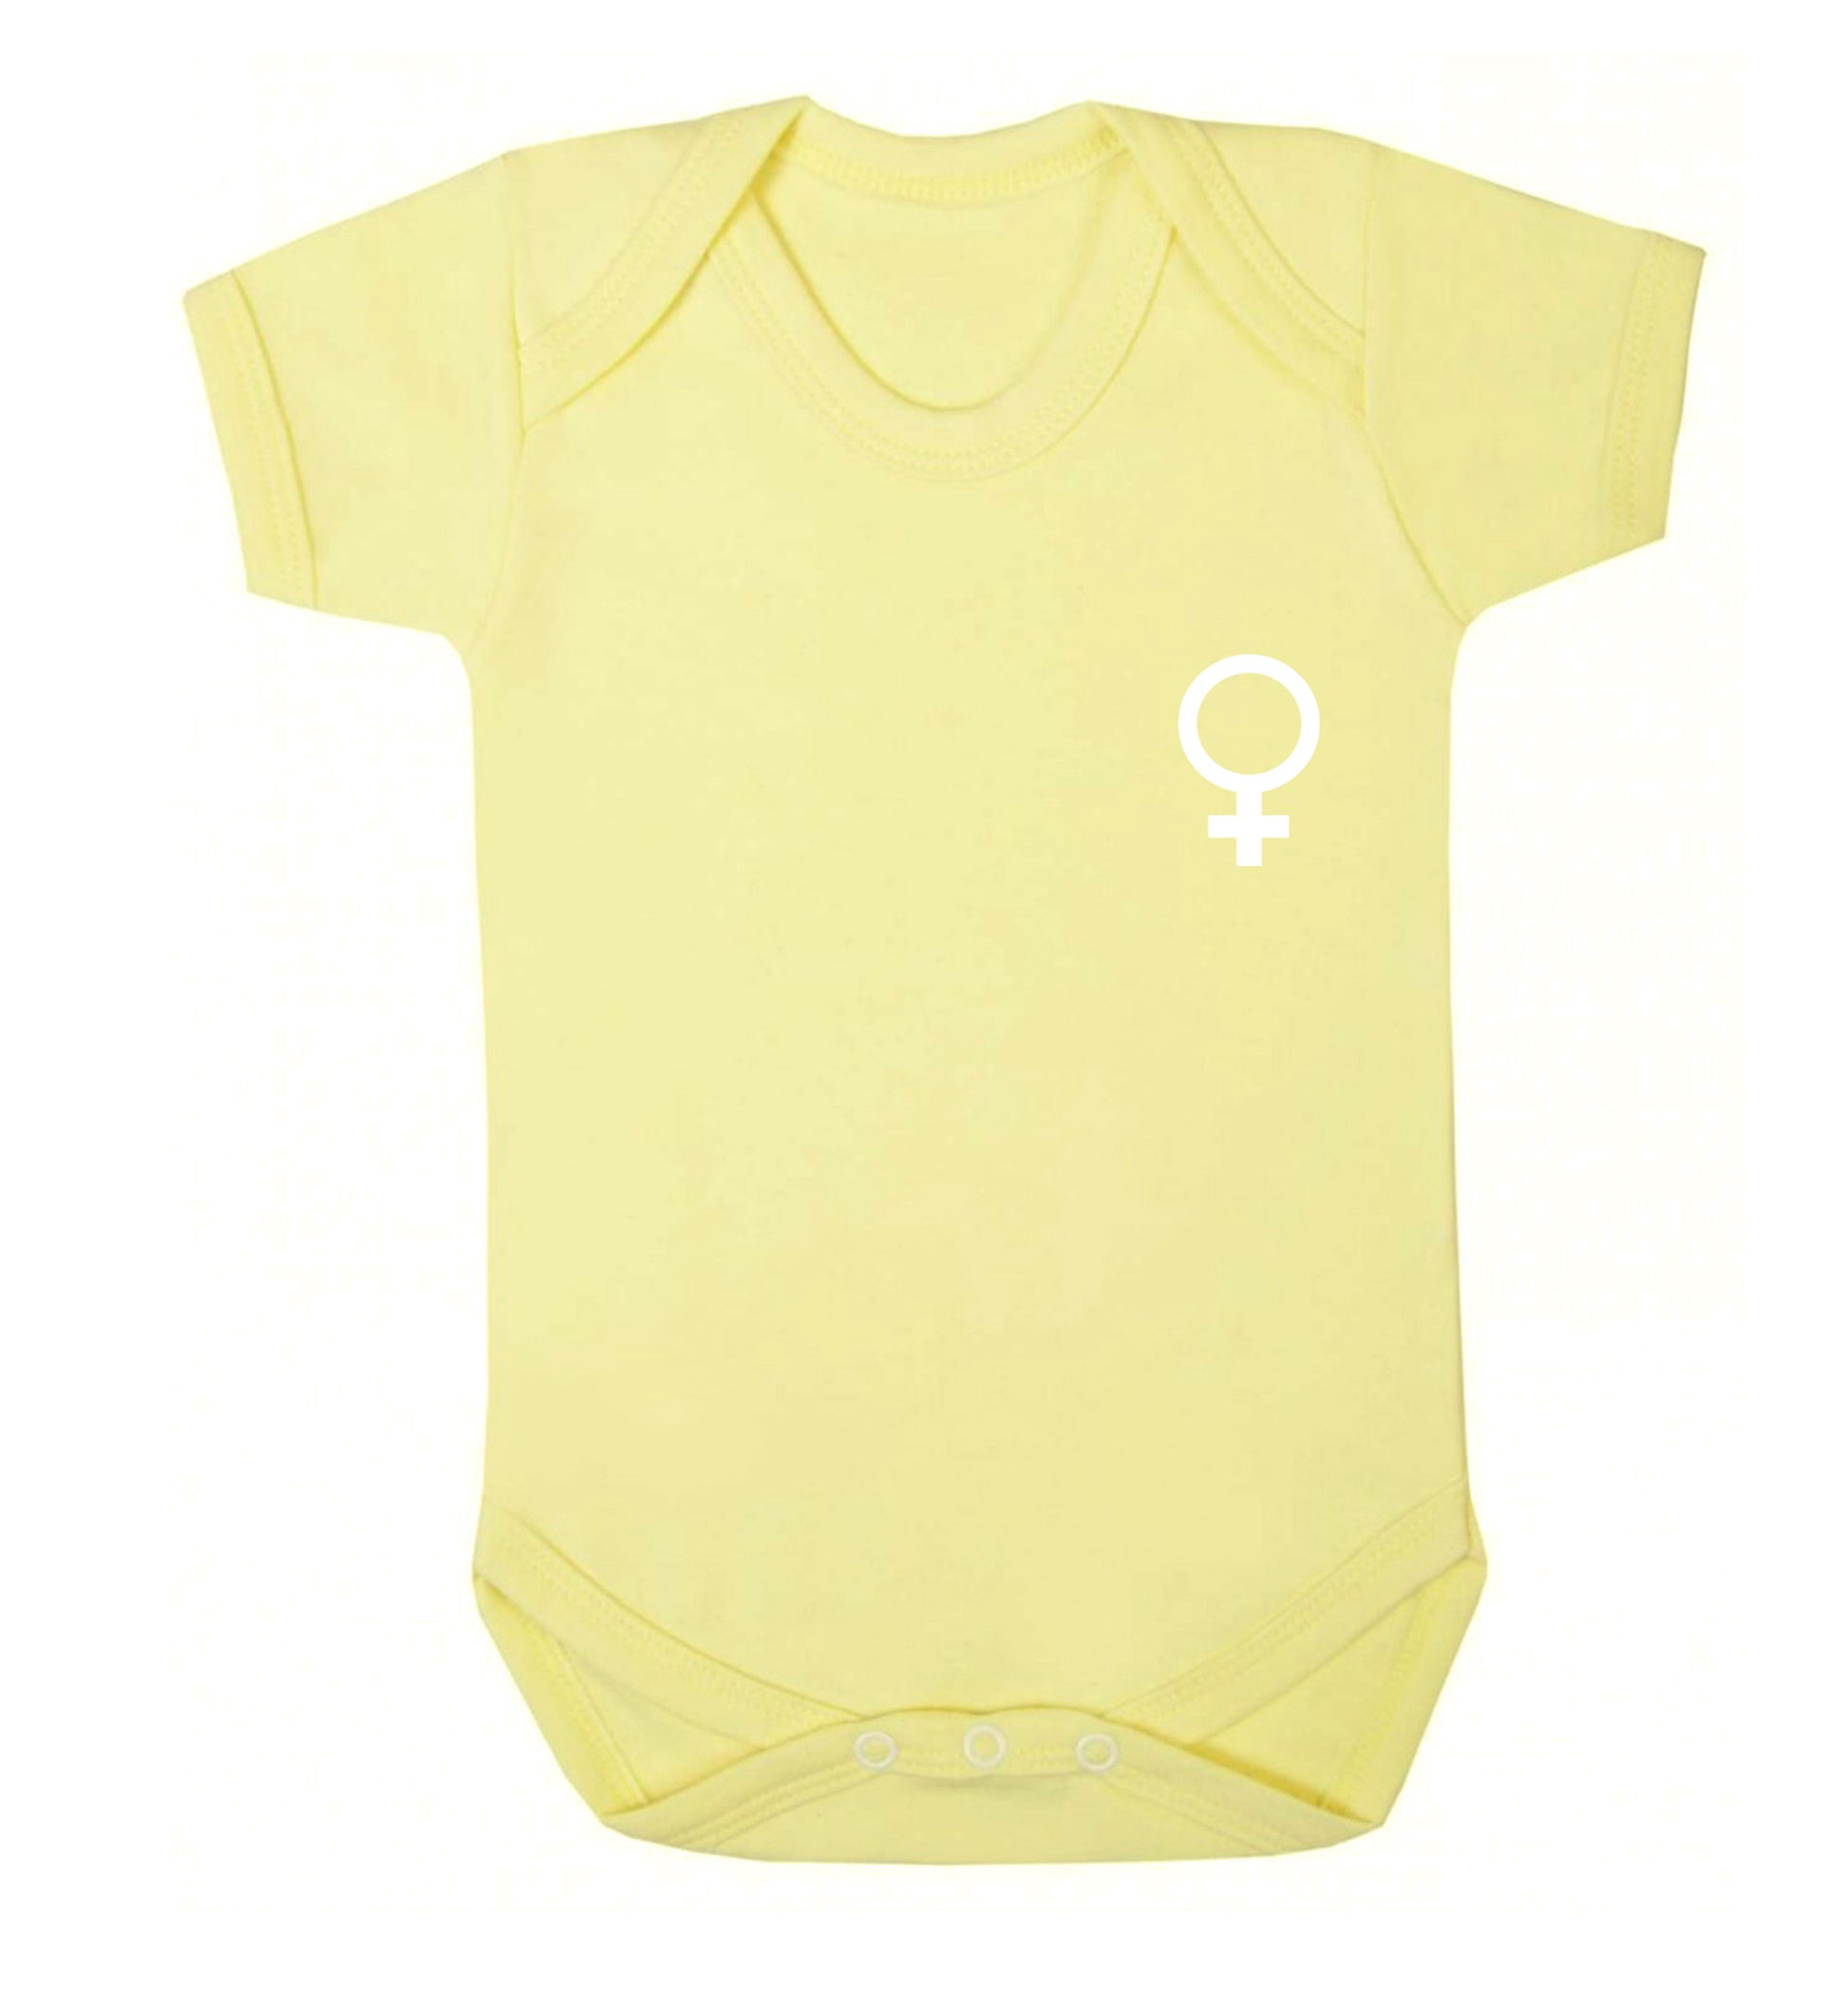 Female pocket symbol Baby Vest pale yellow 18-24 months